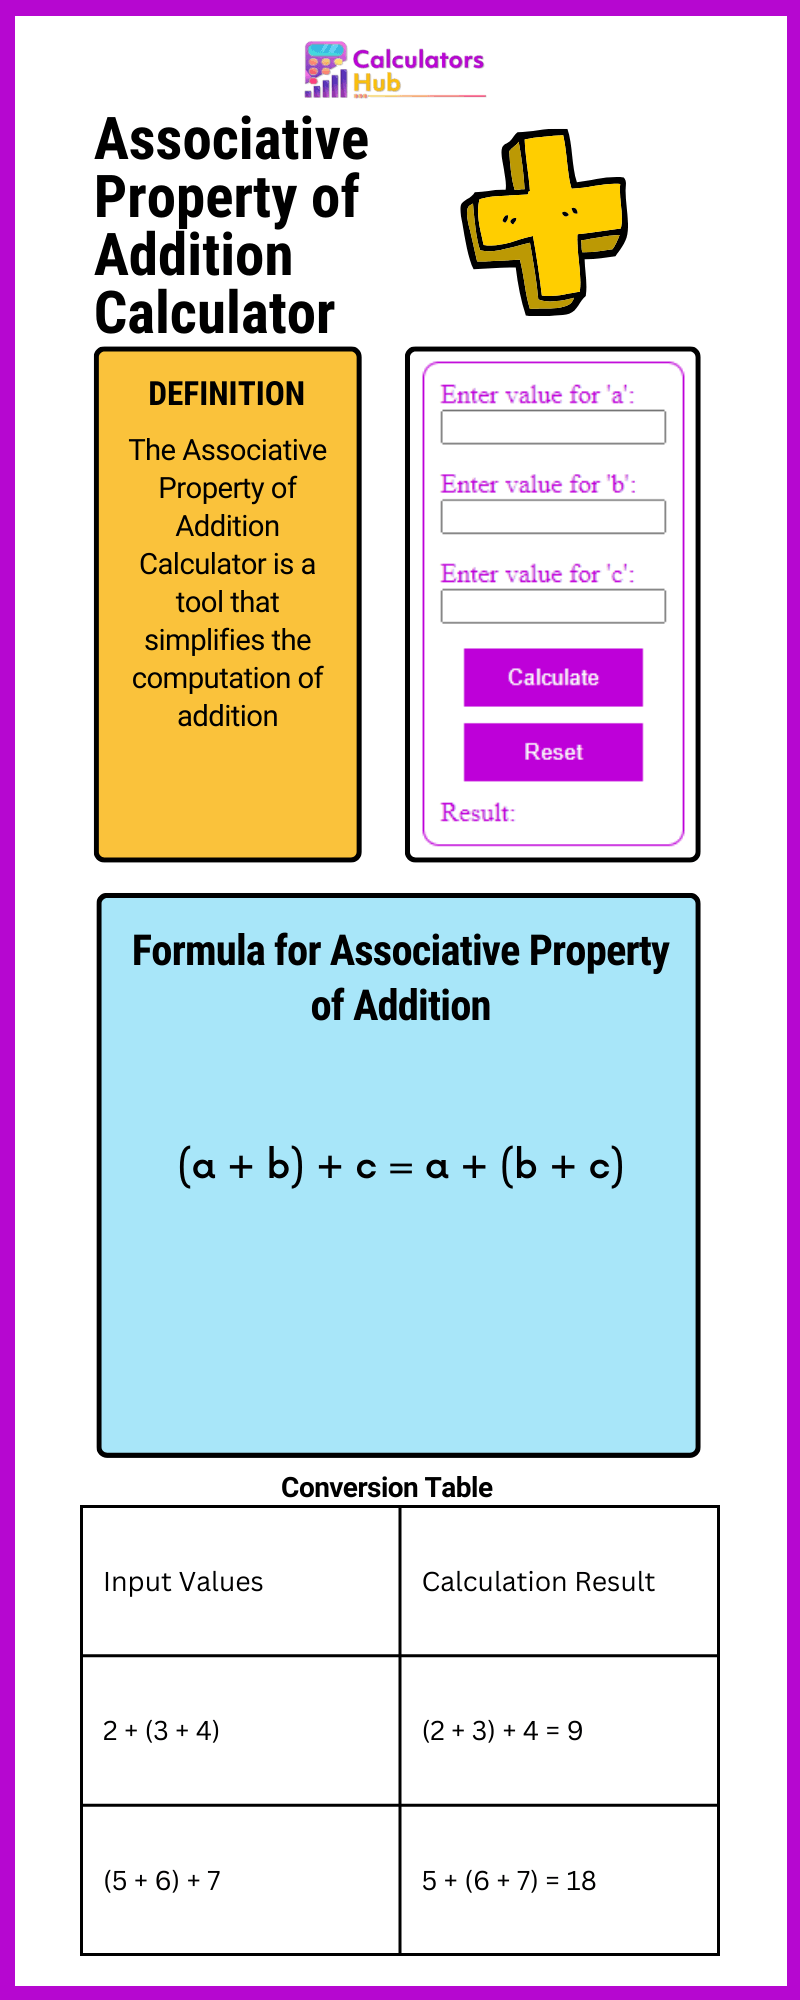 Associative Property of Addition Calculator